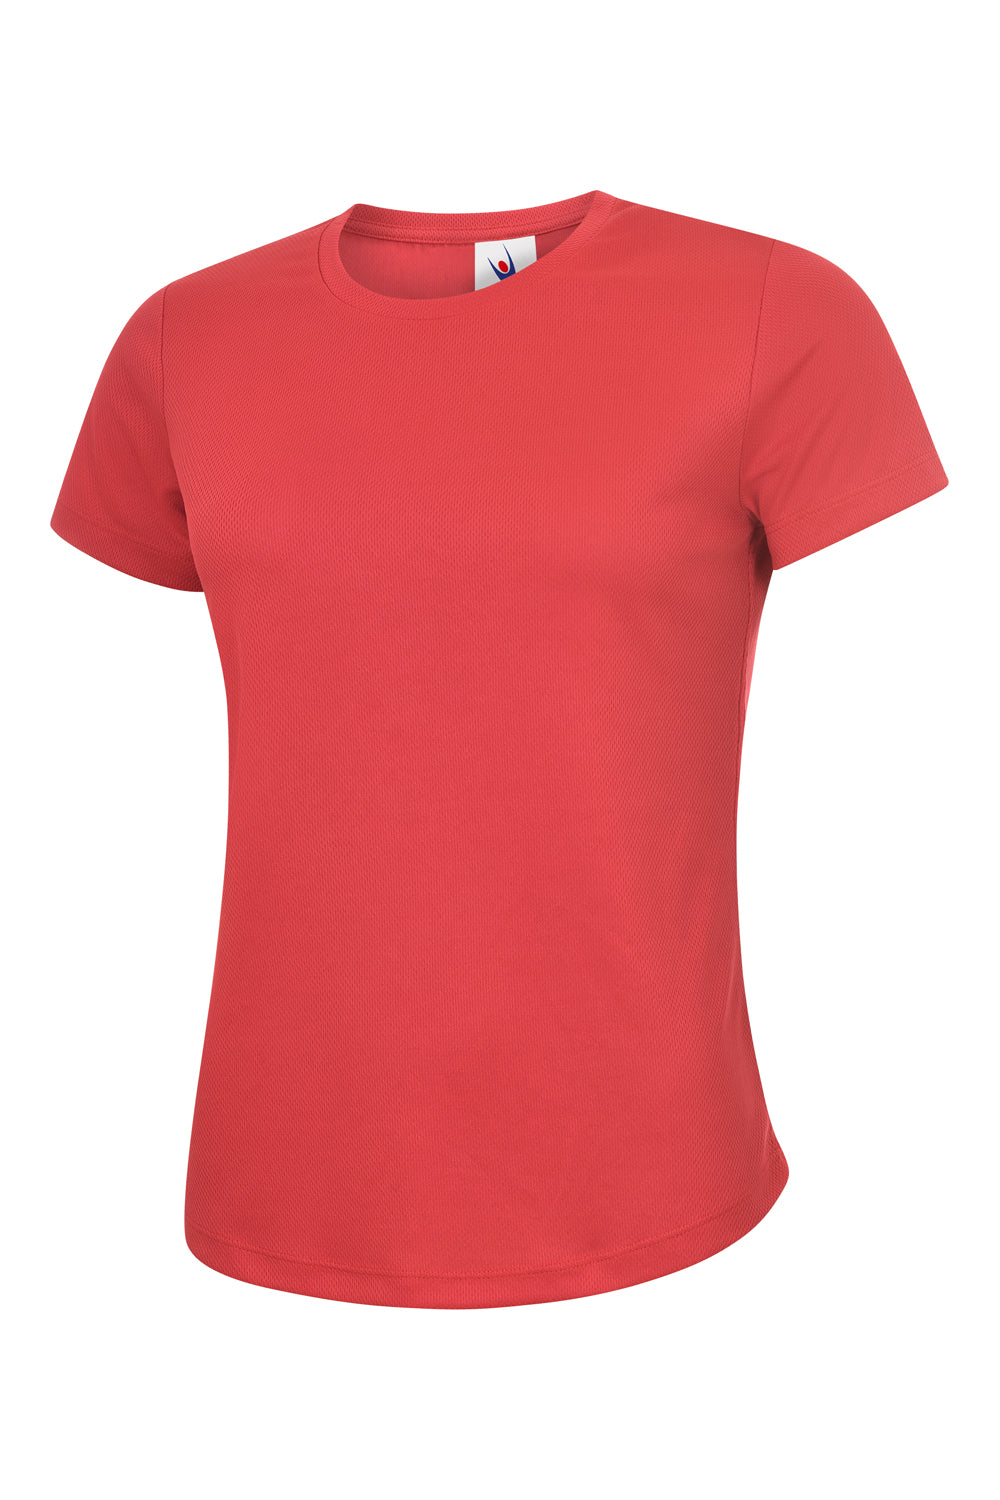 Uneek Ladies Ultra Cool T Shirt UC316 - Red